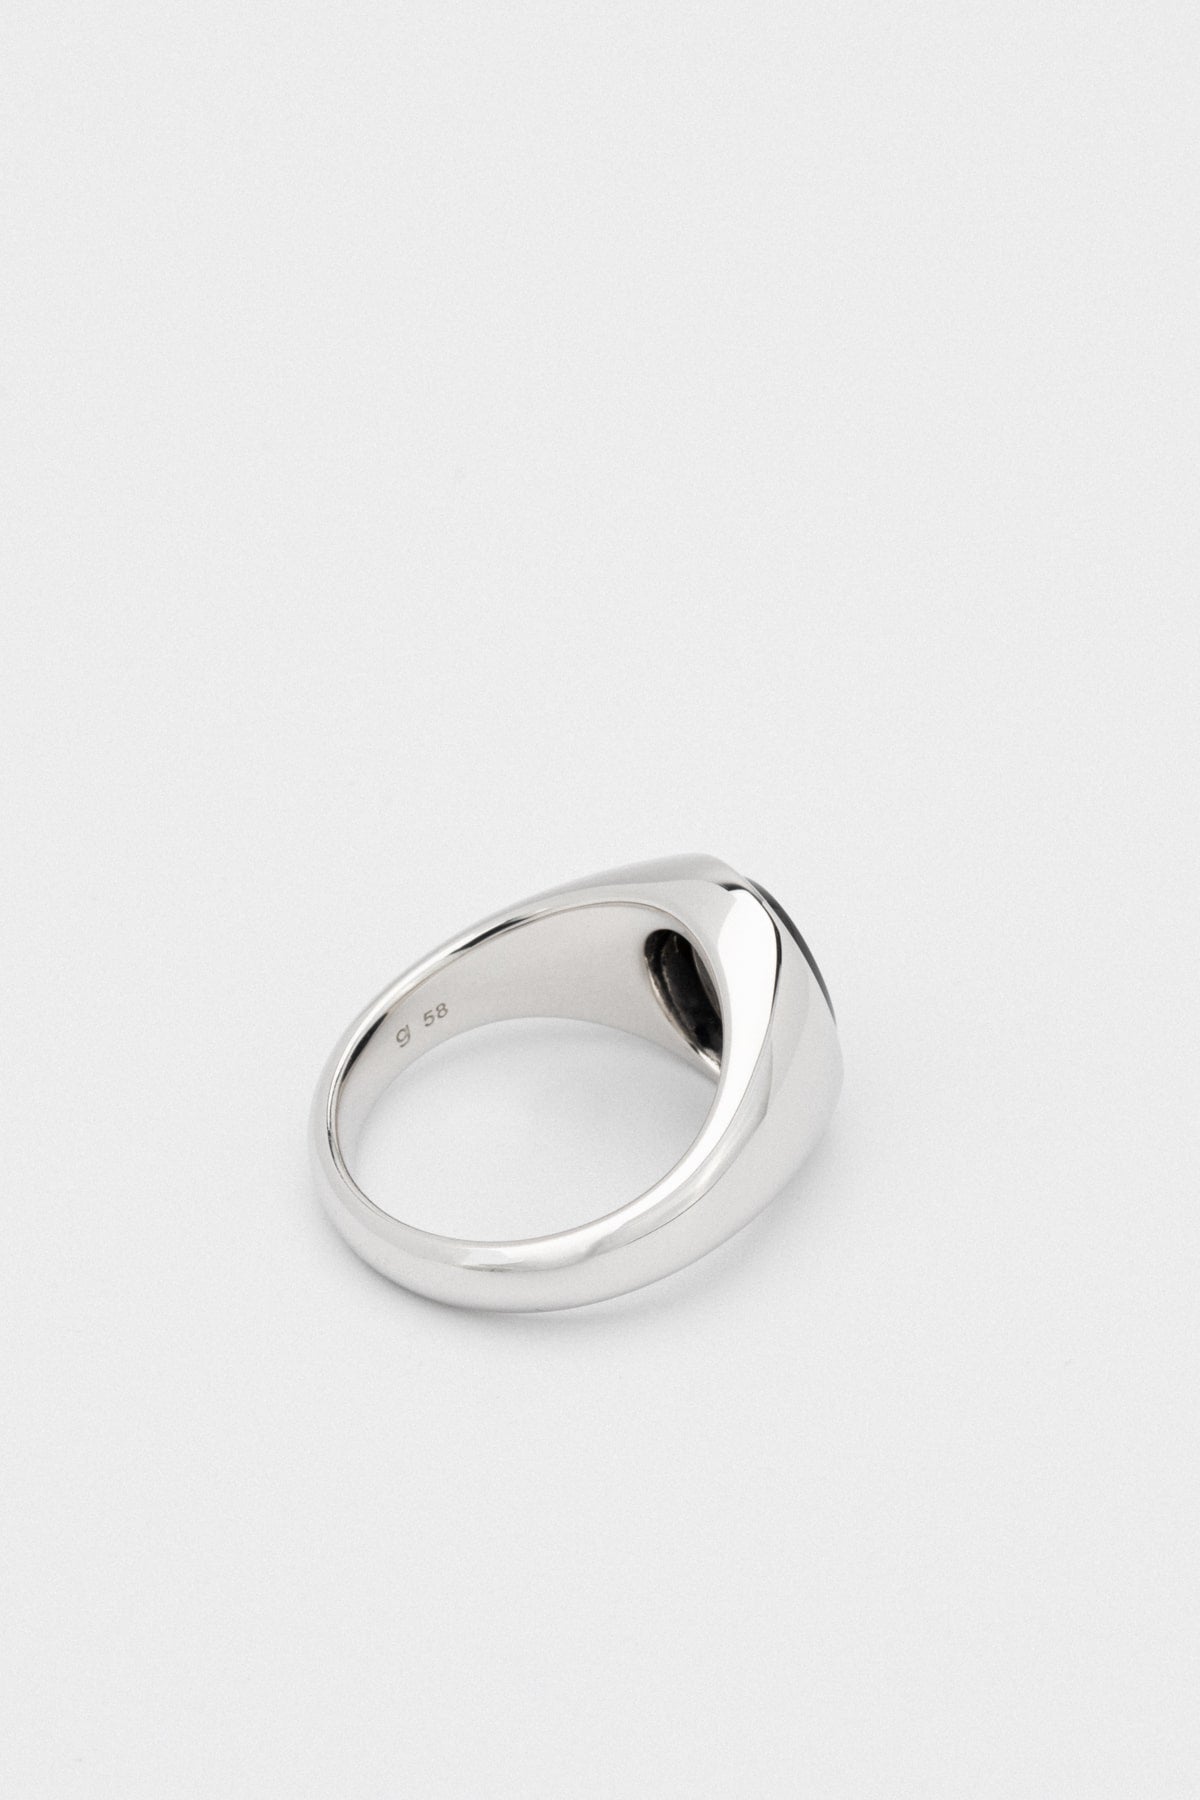 B213_Lizzie Ring - Polished Onyx_L_02